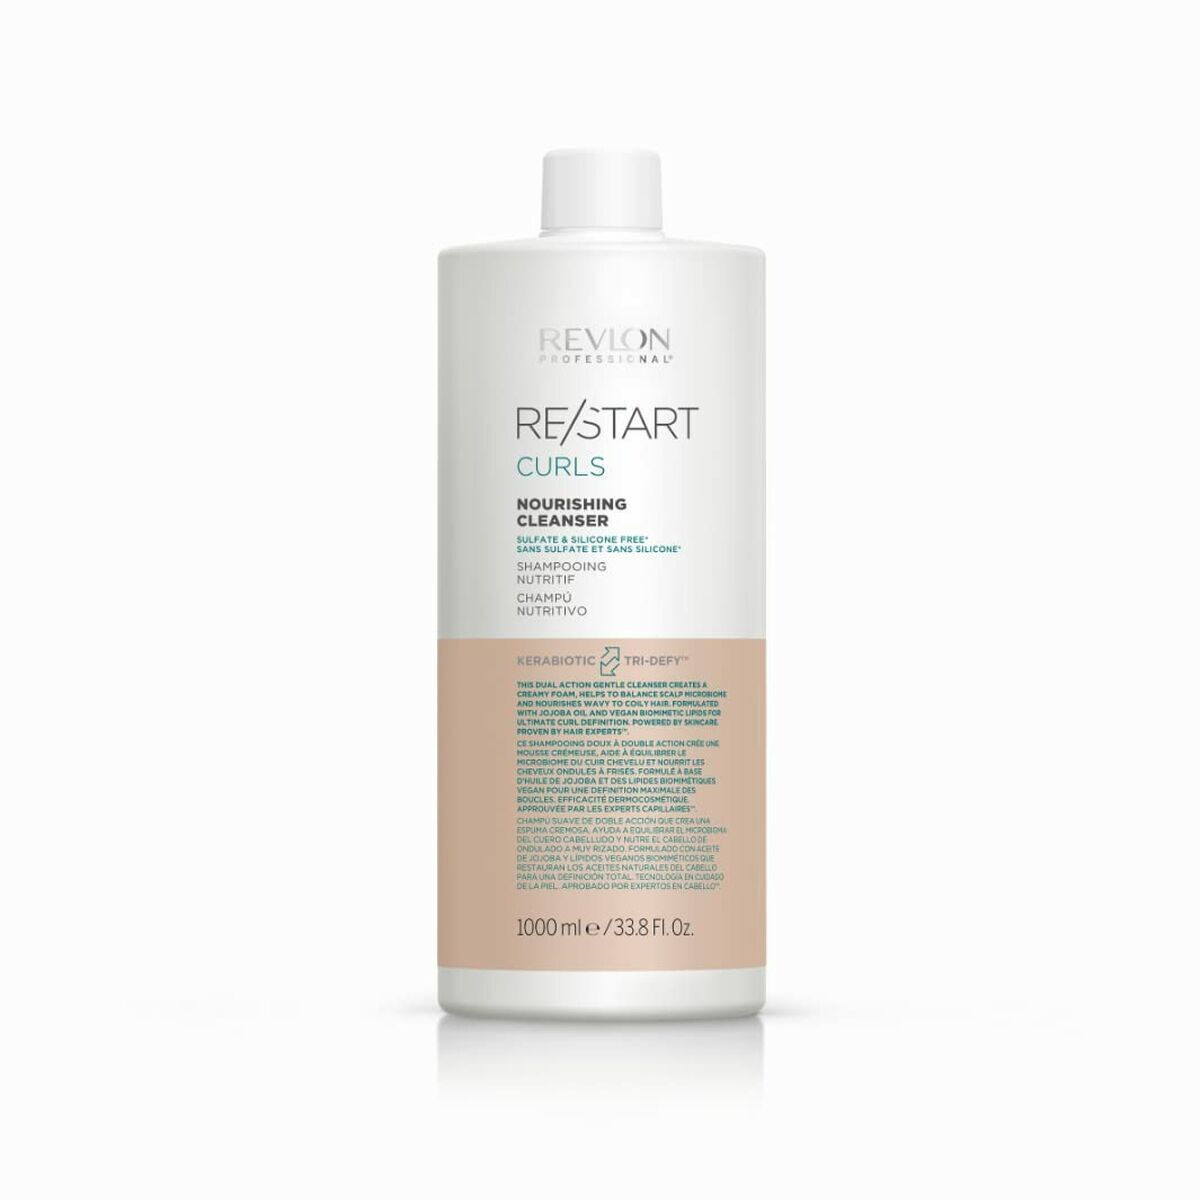 Restart Hair Smoothing 1x1000ml Shampoos Revlon Curly for